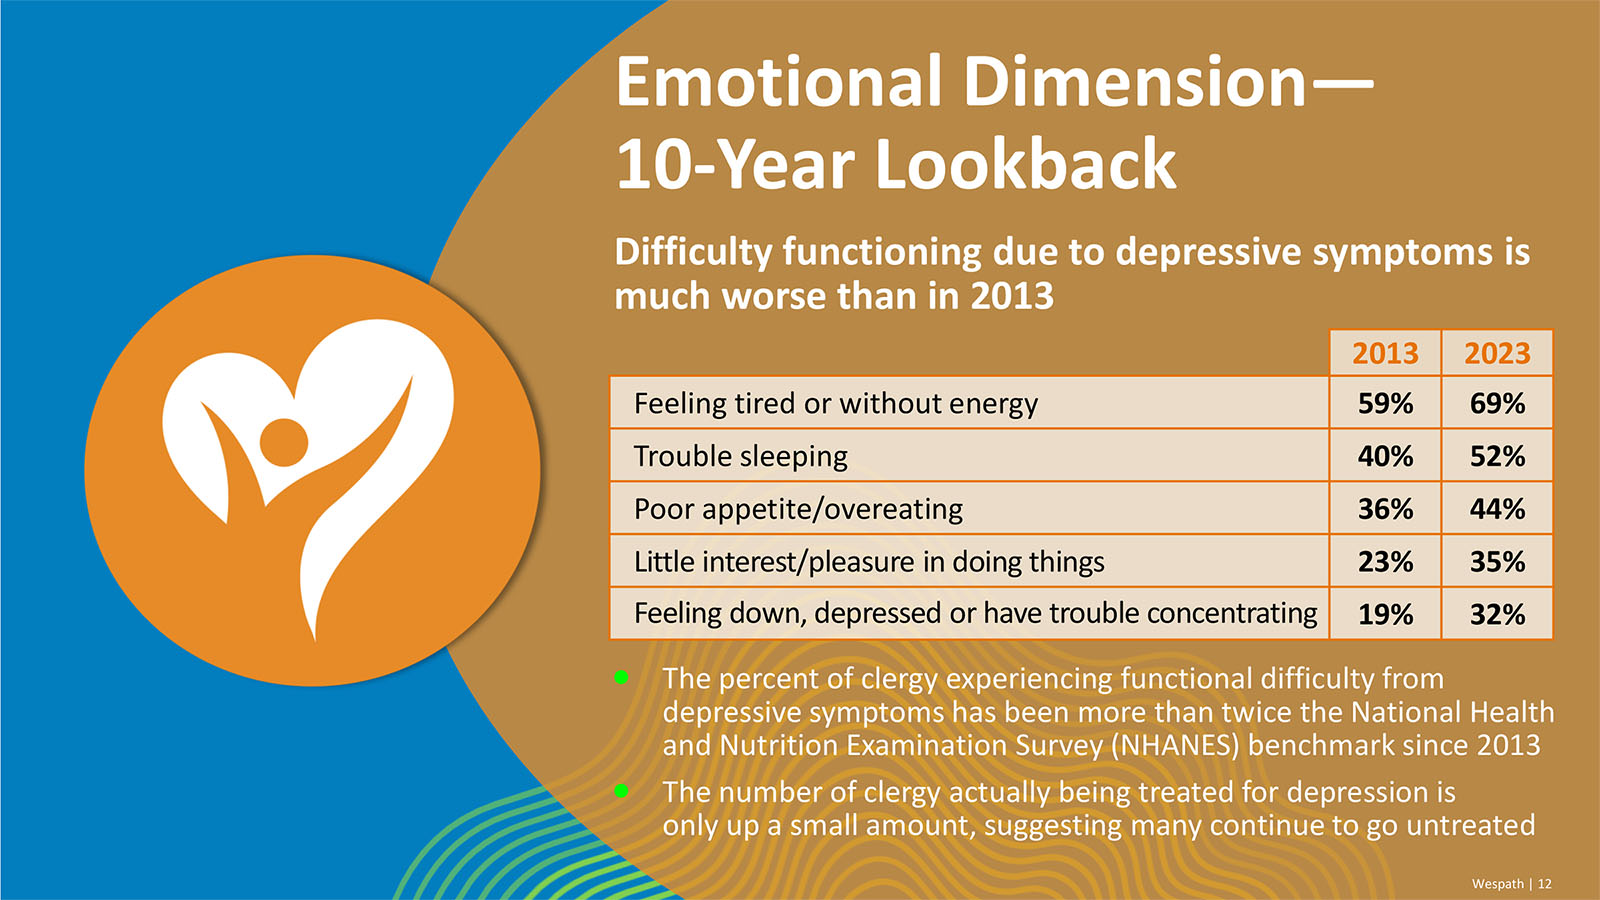 "Emotional Dimension— 10-Year Lookback" Courtesy image